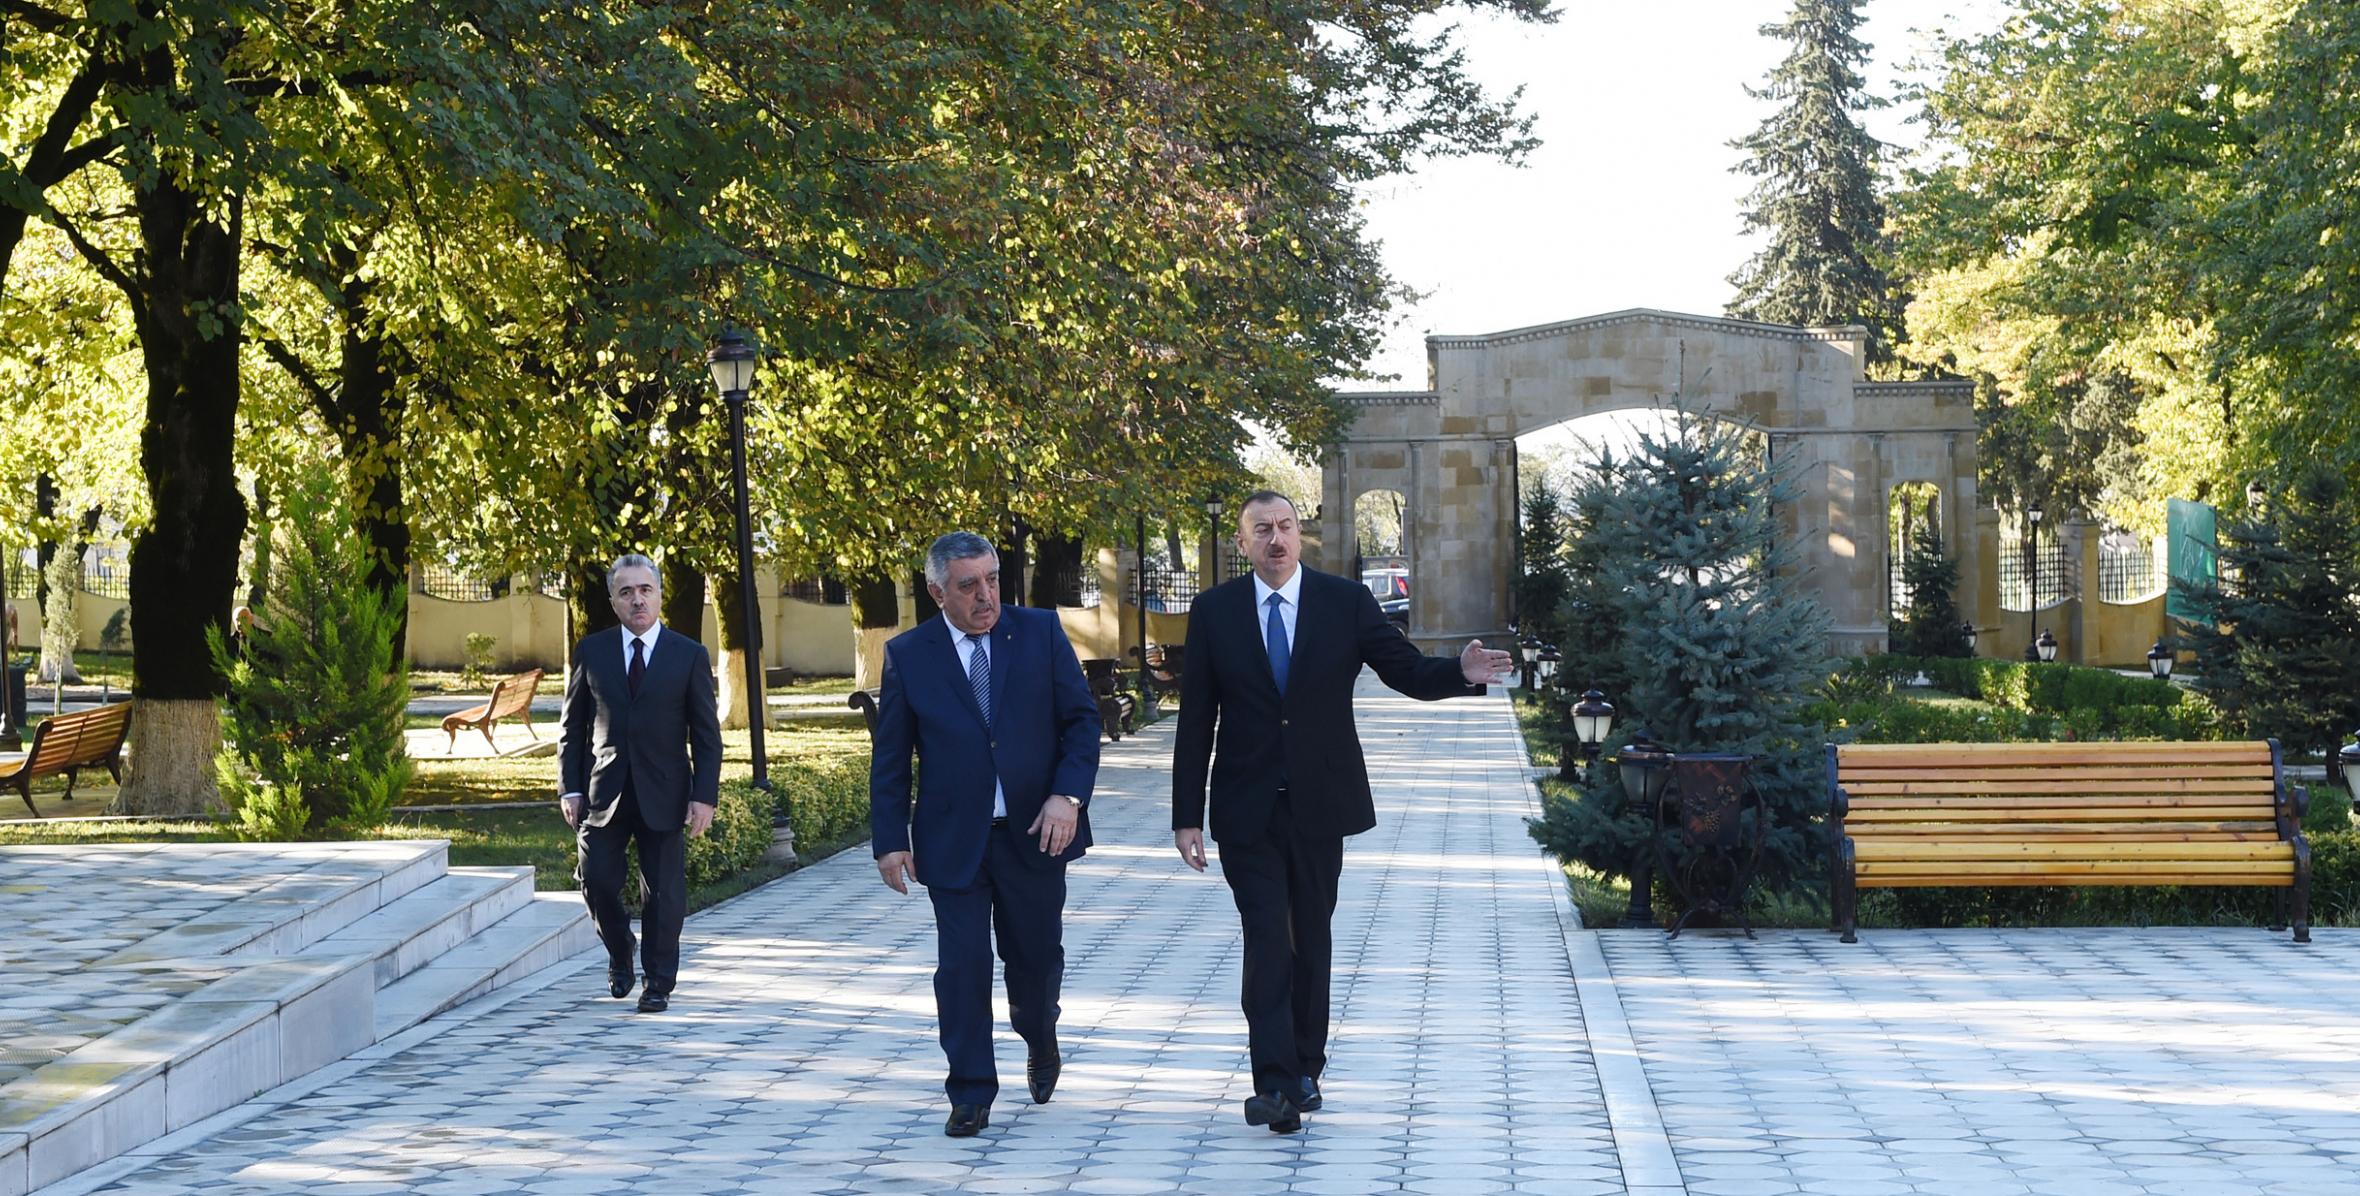 Ilham Aliyev arrived in Zagatala district